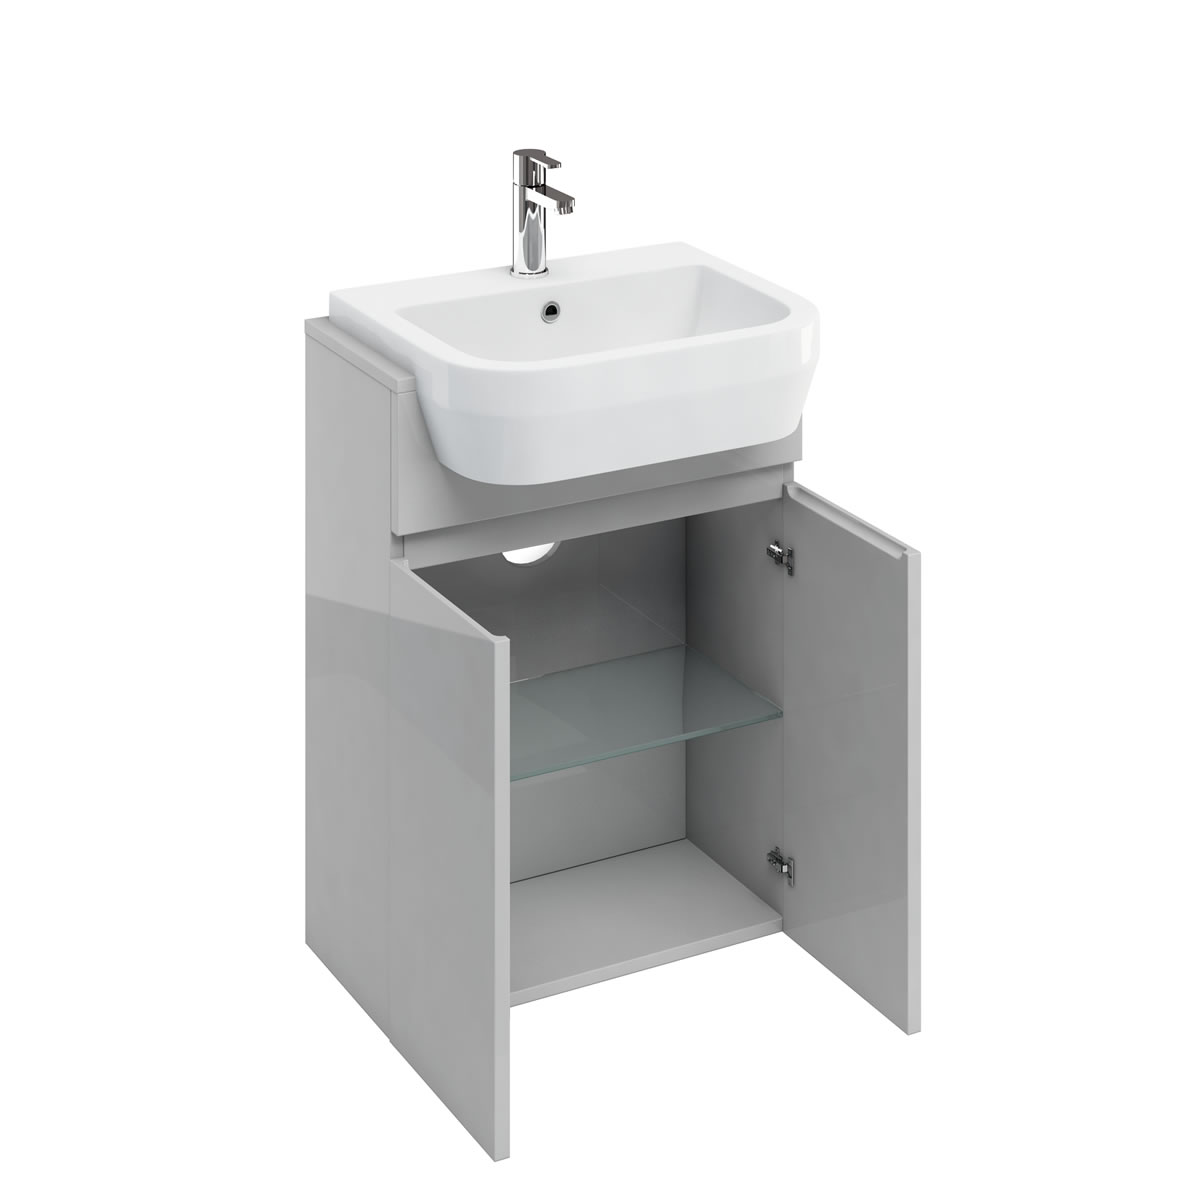 D30 semi recessed basin unit - Light Grey